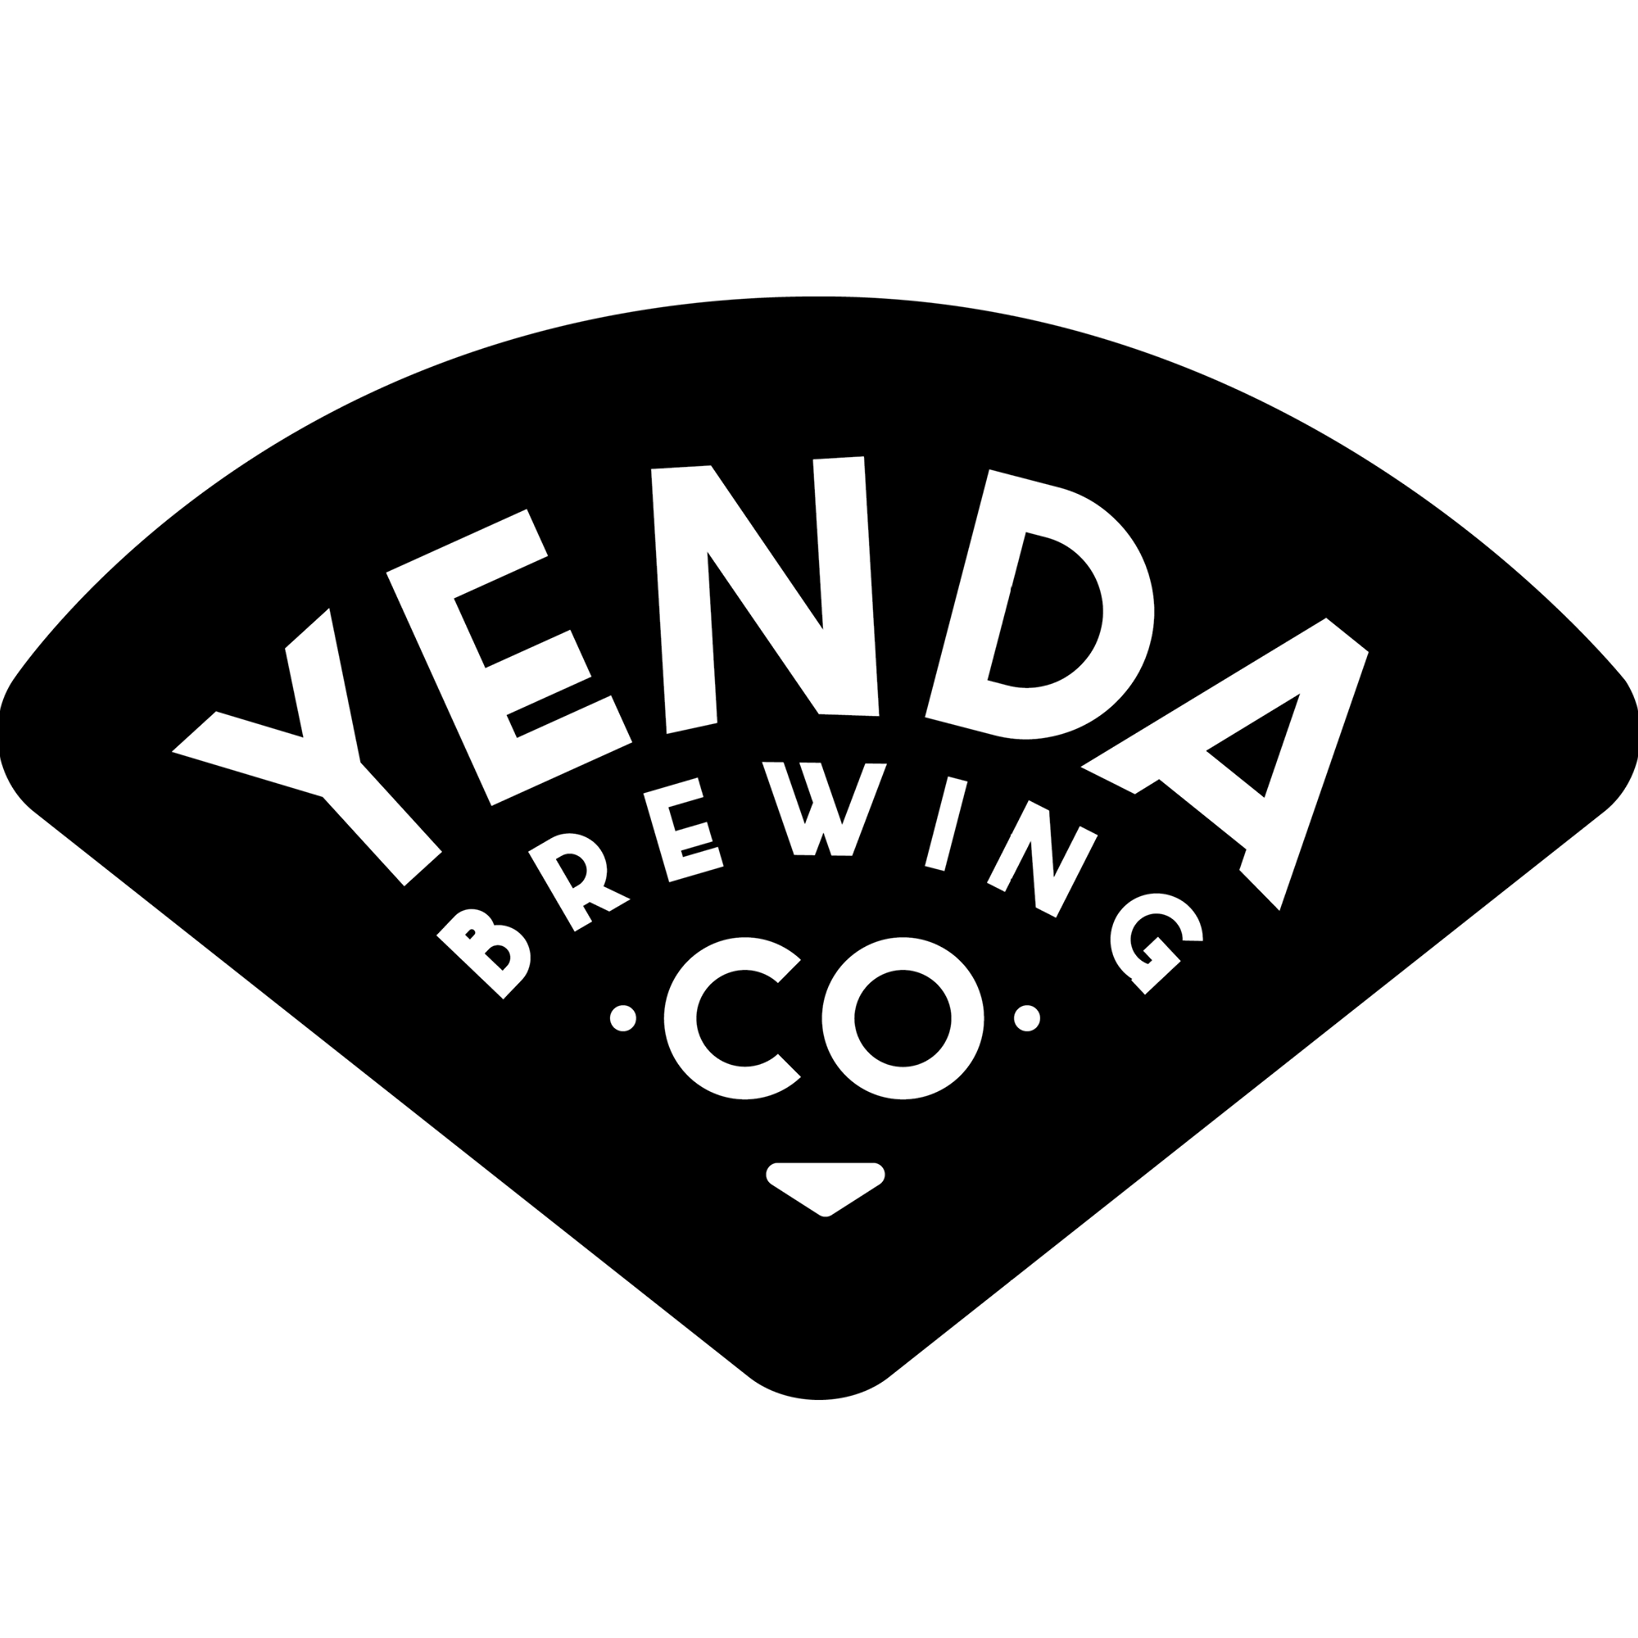 Yenda Brewing Co.